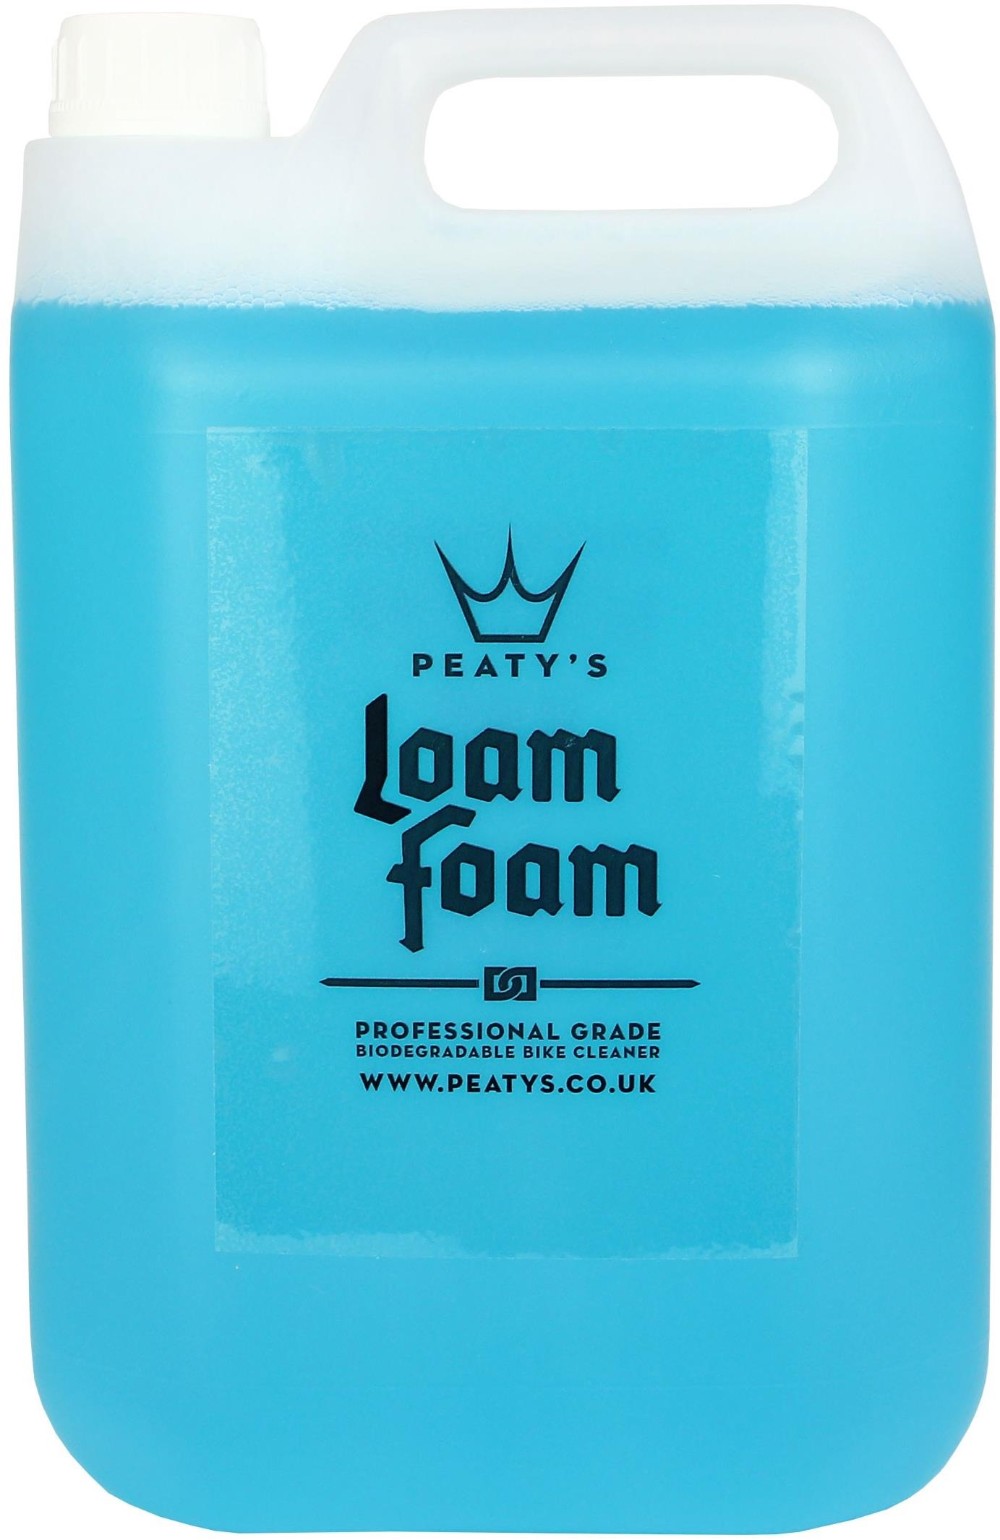 Loam Foam Professional Grade Bike Cleaner 5 Litre image 0